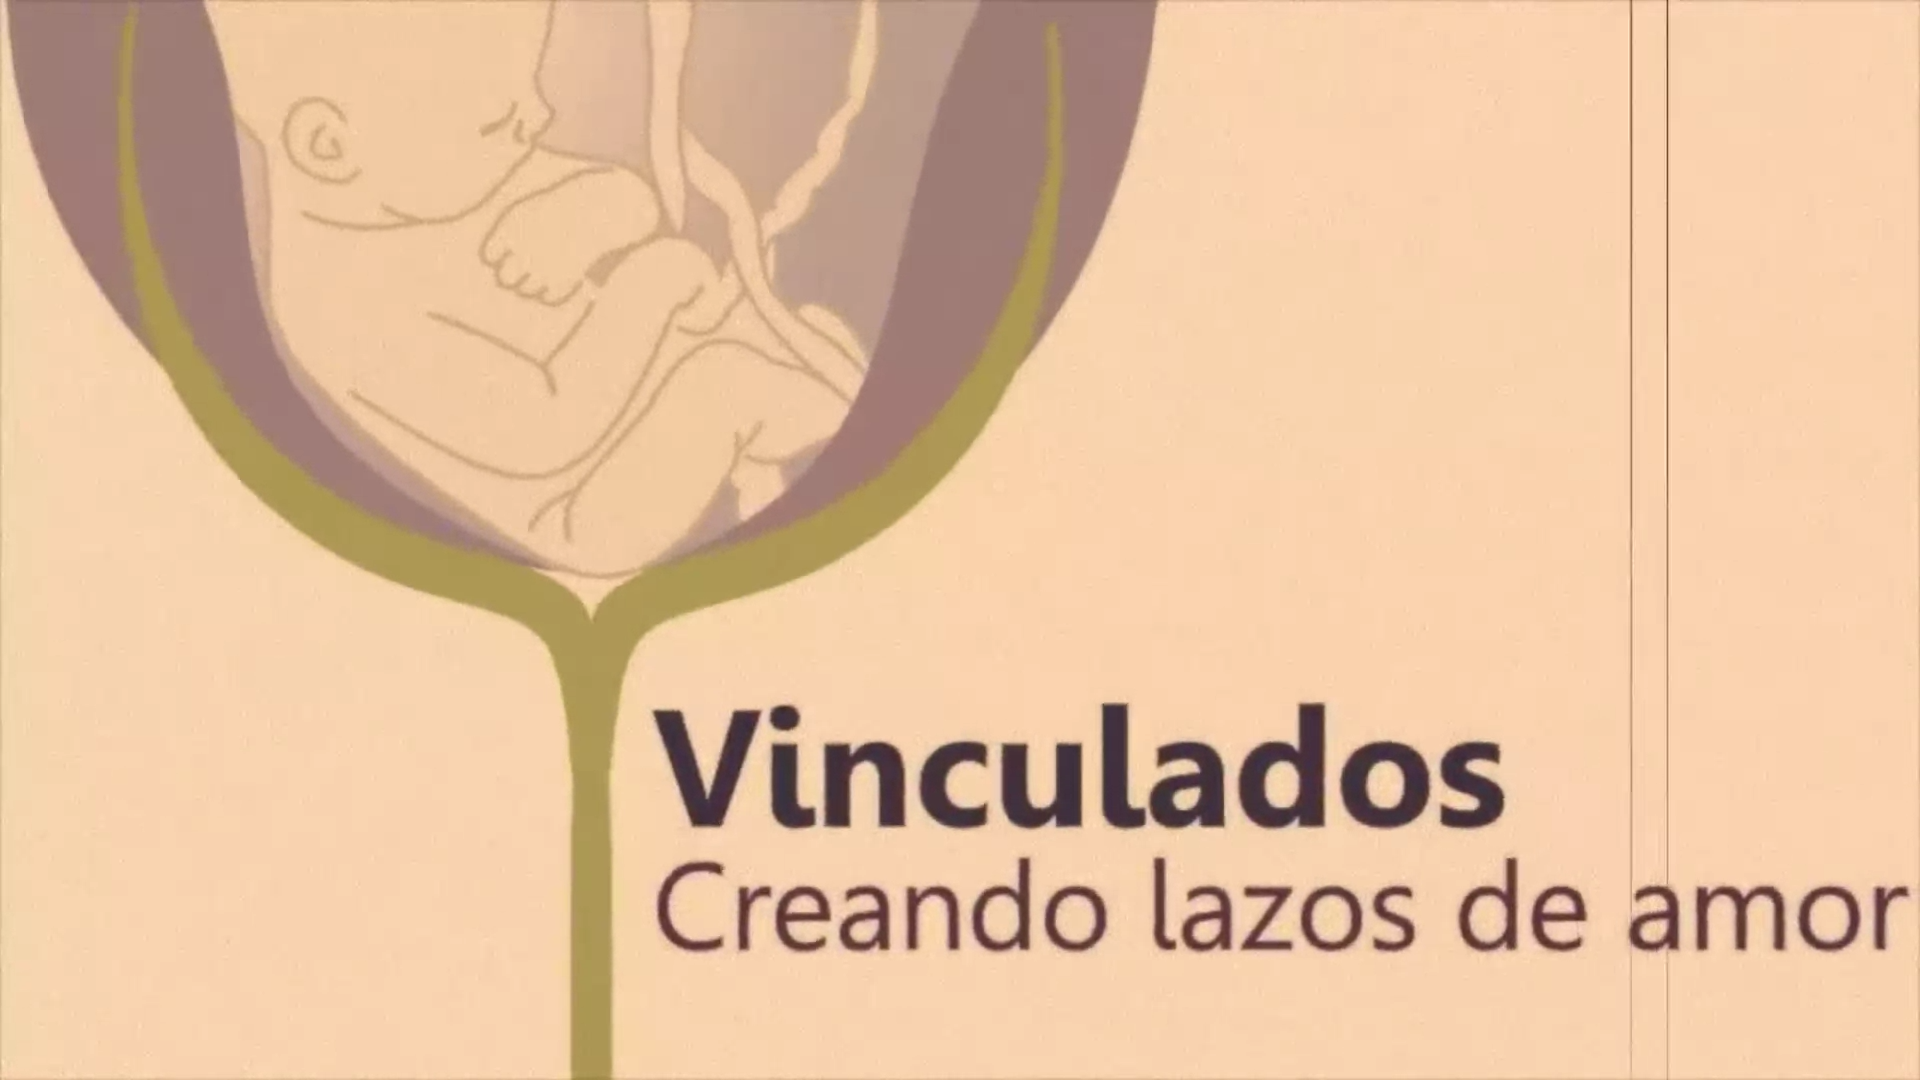 VINCULADOS: Respectful Upbringing